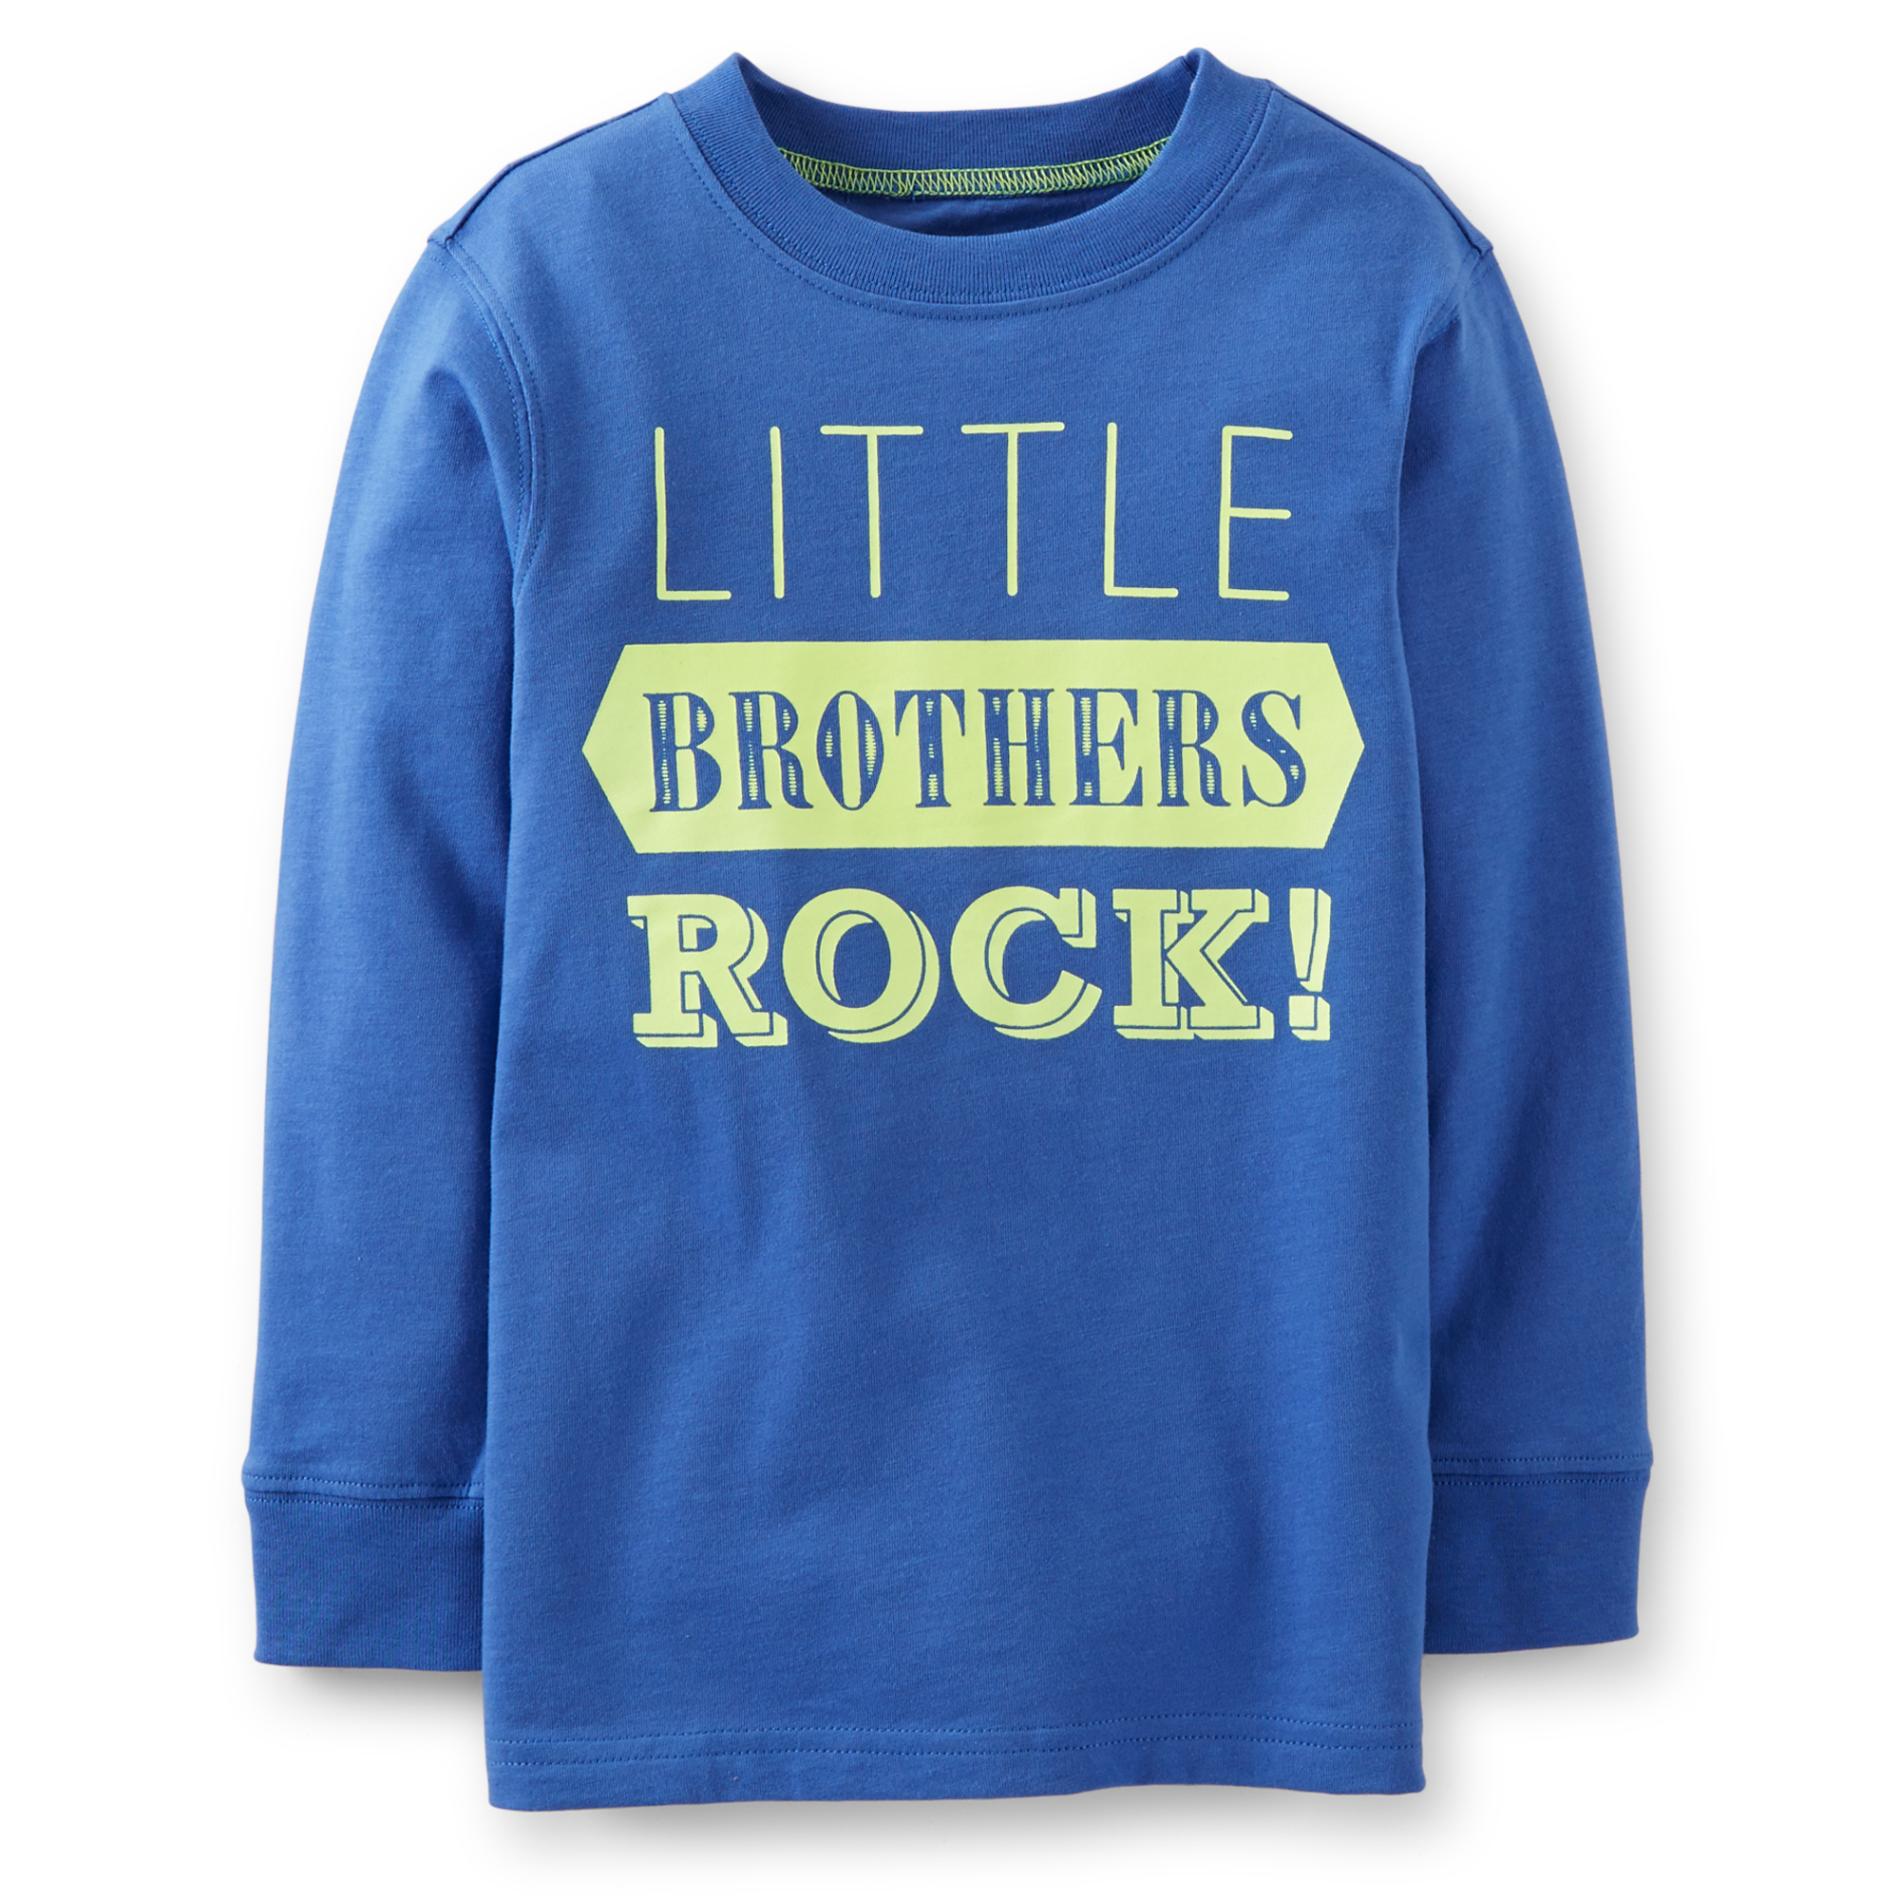 Carter's Toddler Boy's Sweatshirt - Little Brothers Rock